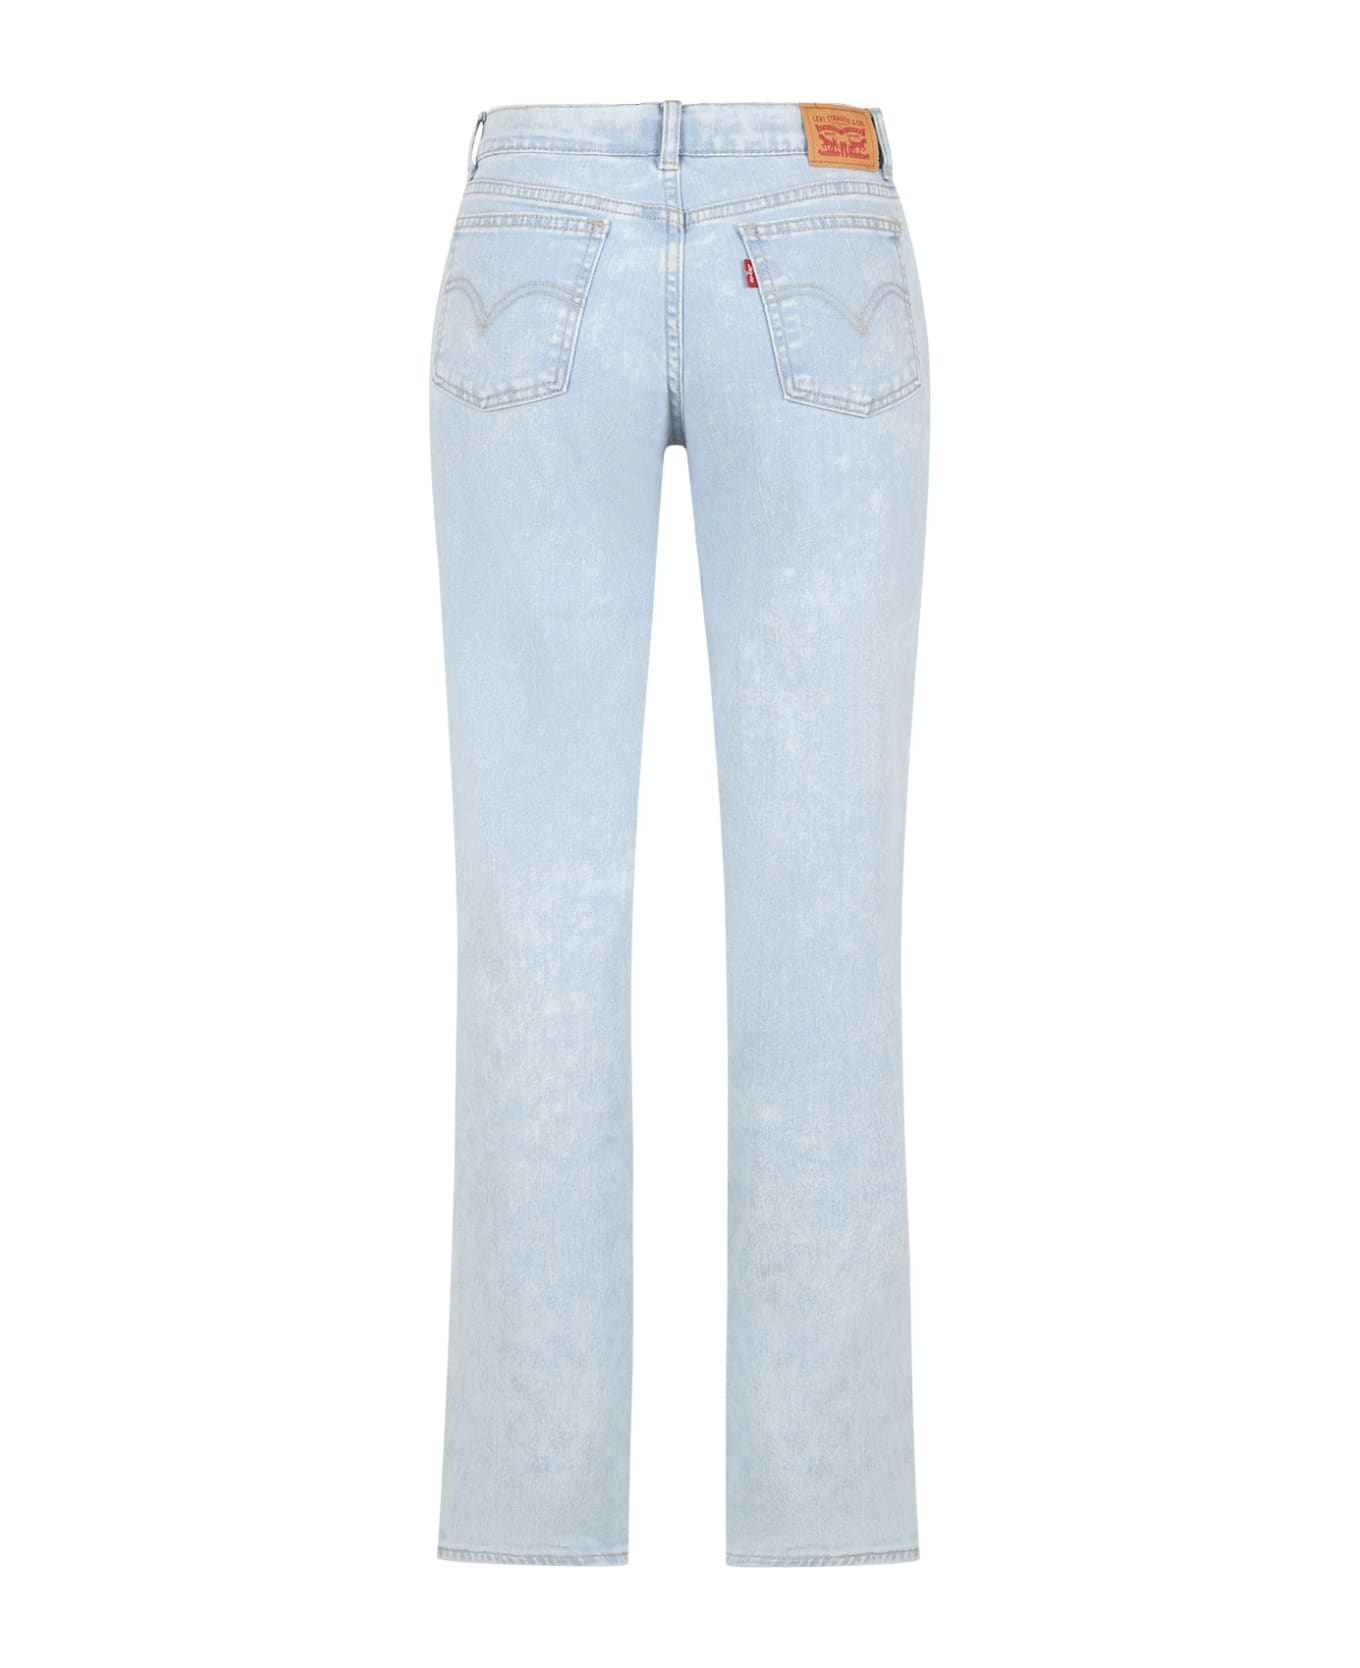 Levi's 726 Denim Jeans For Girl - Denim ボトムス